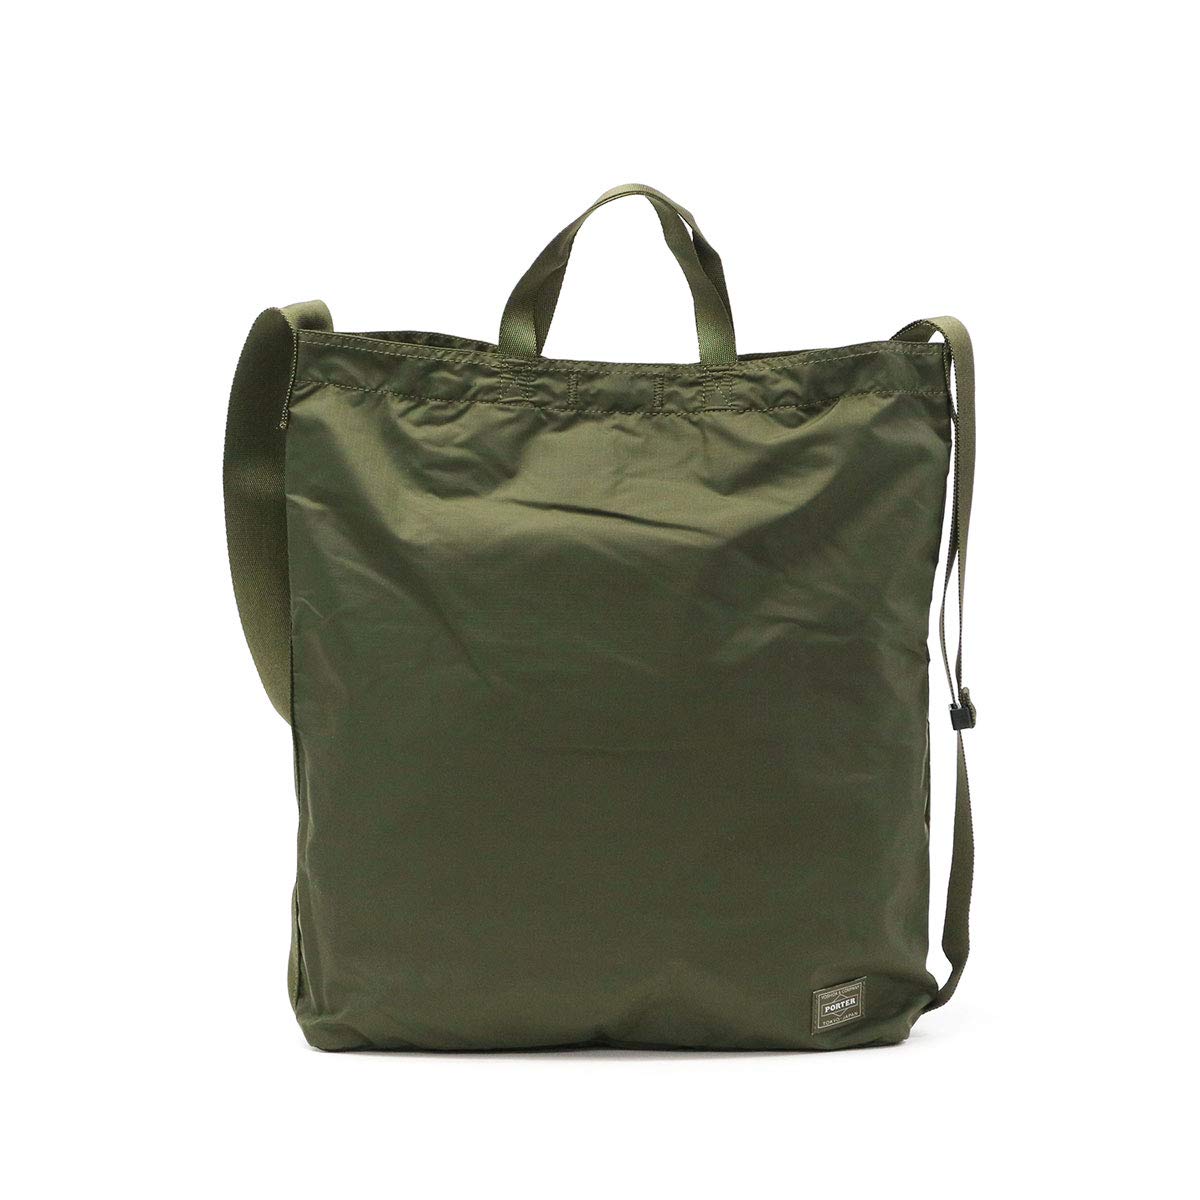 Yoshida Bag PORTER FLEX 2WAY SHOULDER BAG Nylon 856-05905 Made in Japan NEW